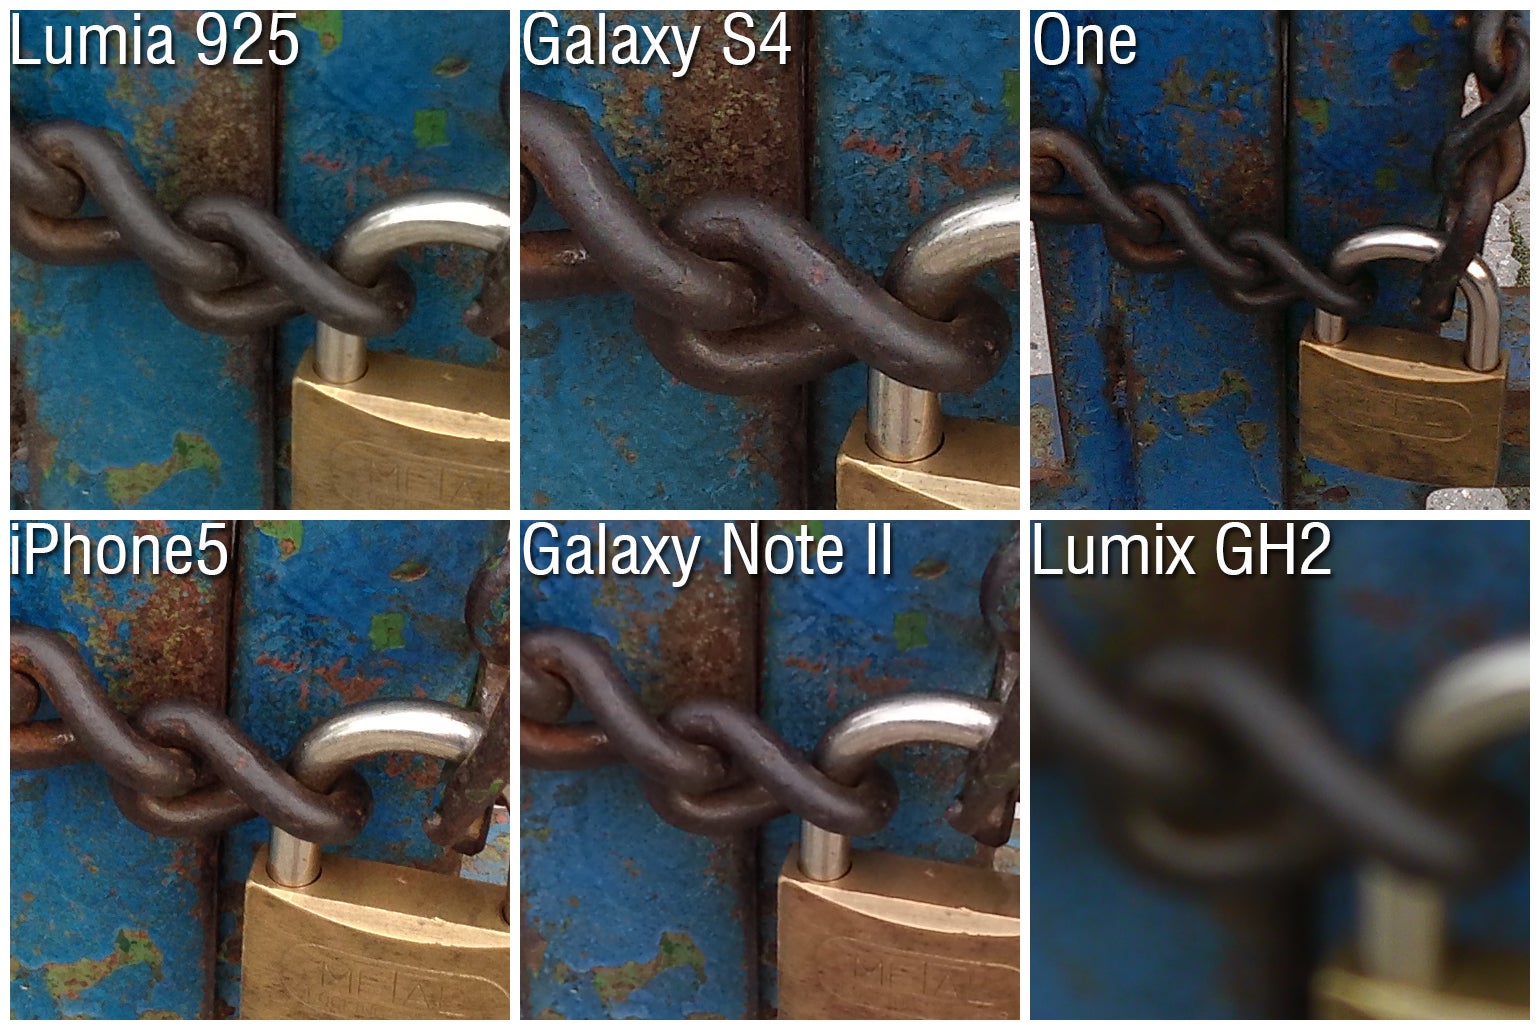 100% crop - Camera comparison: Nokia Lumia 925 vs Samsung Galaxy S4, HTC One, iPhone 5, Samsung Galaxy Note II